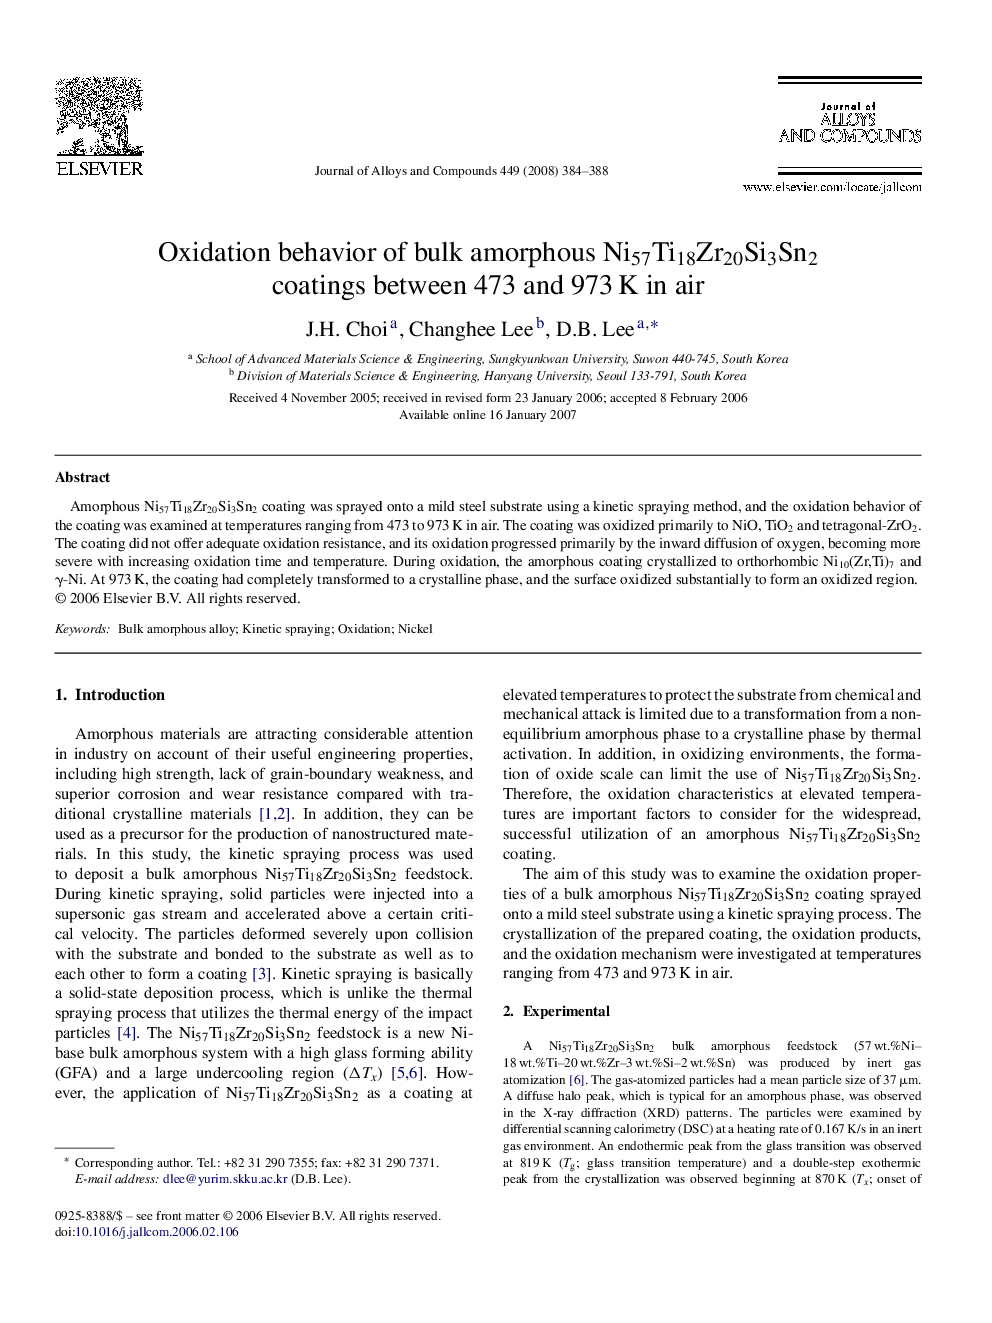 Oxidation behavior of bulk amorphous Ni57Ti18Zr20Si3Sn2 coatings between 473 and 973Â K in air